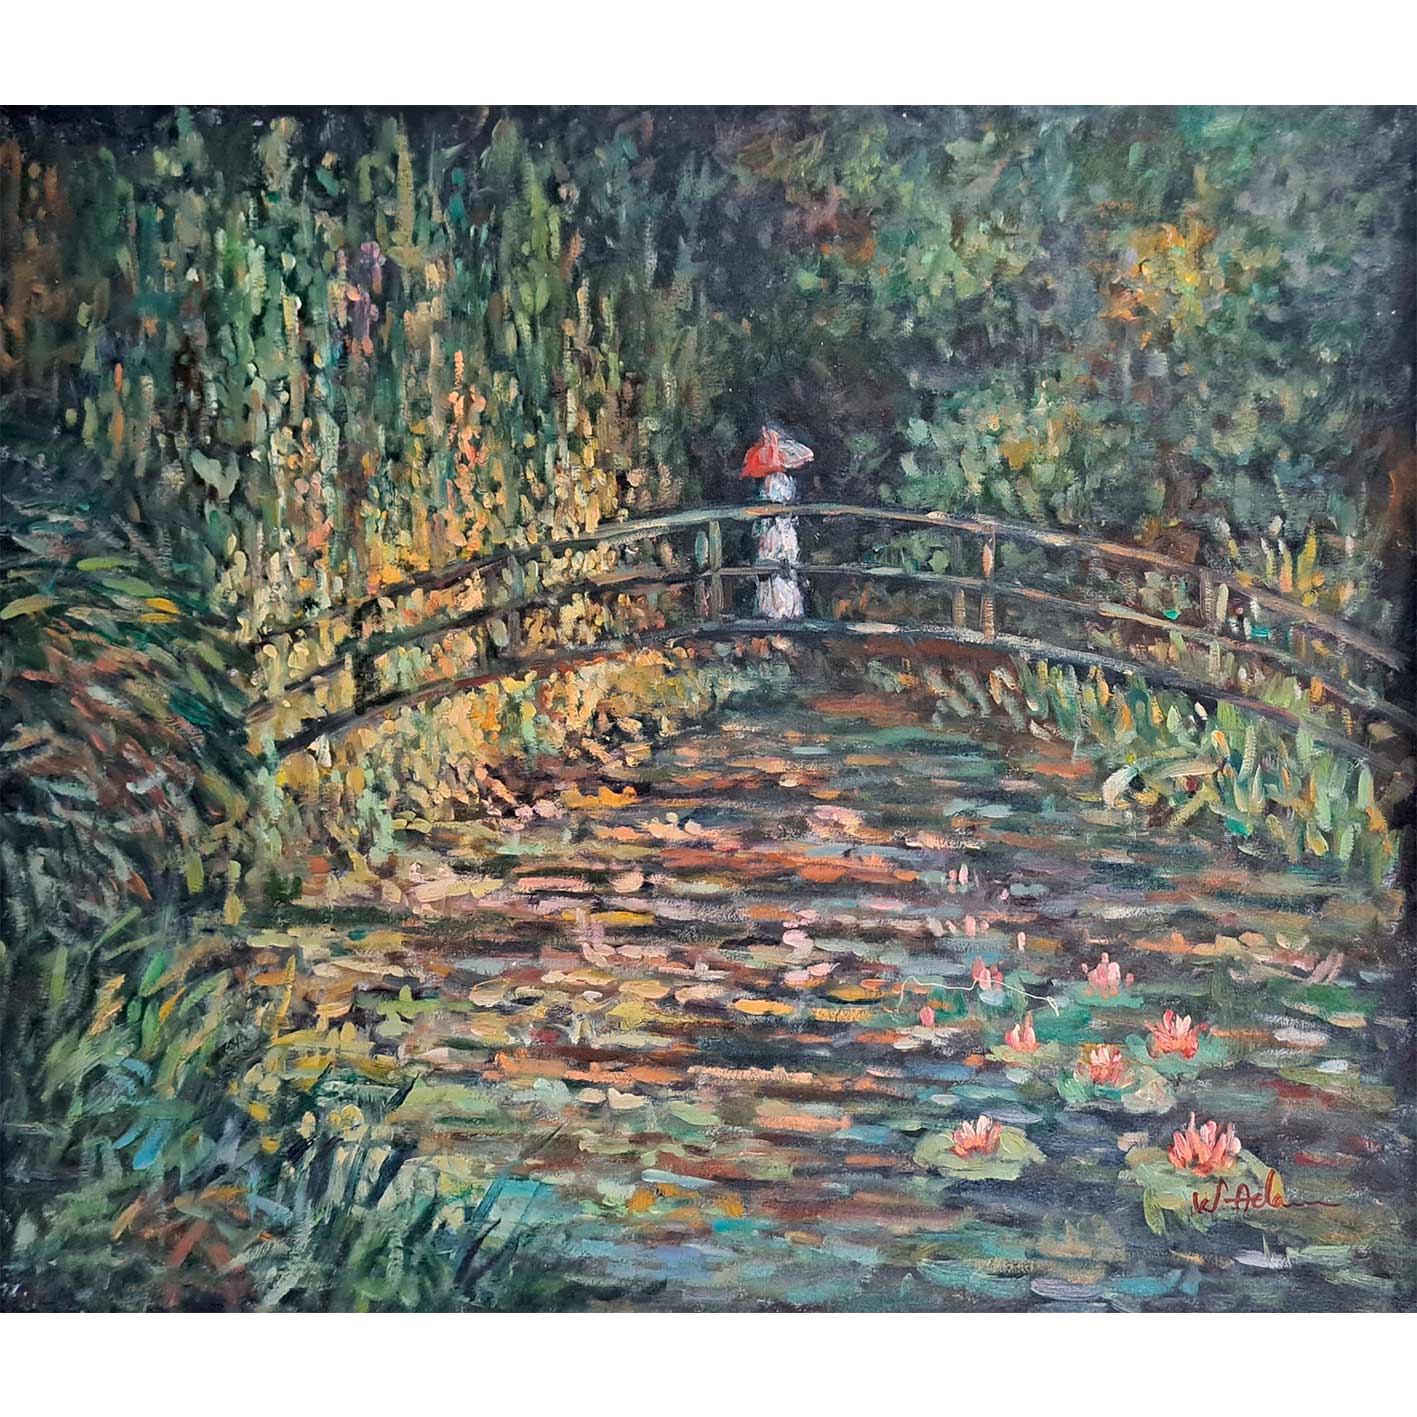 Nymphea Monet Pond Painting 60x50 cm